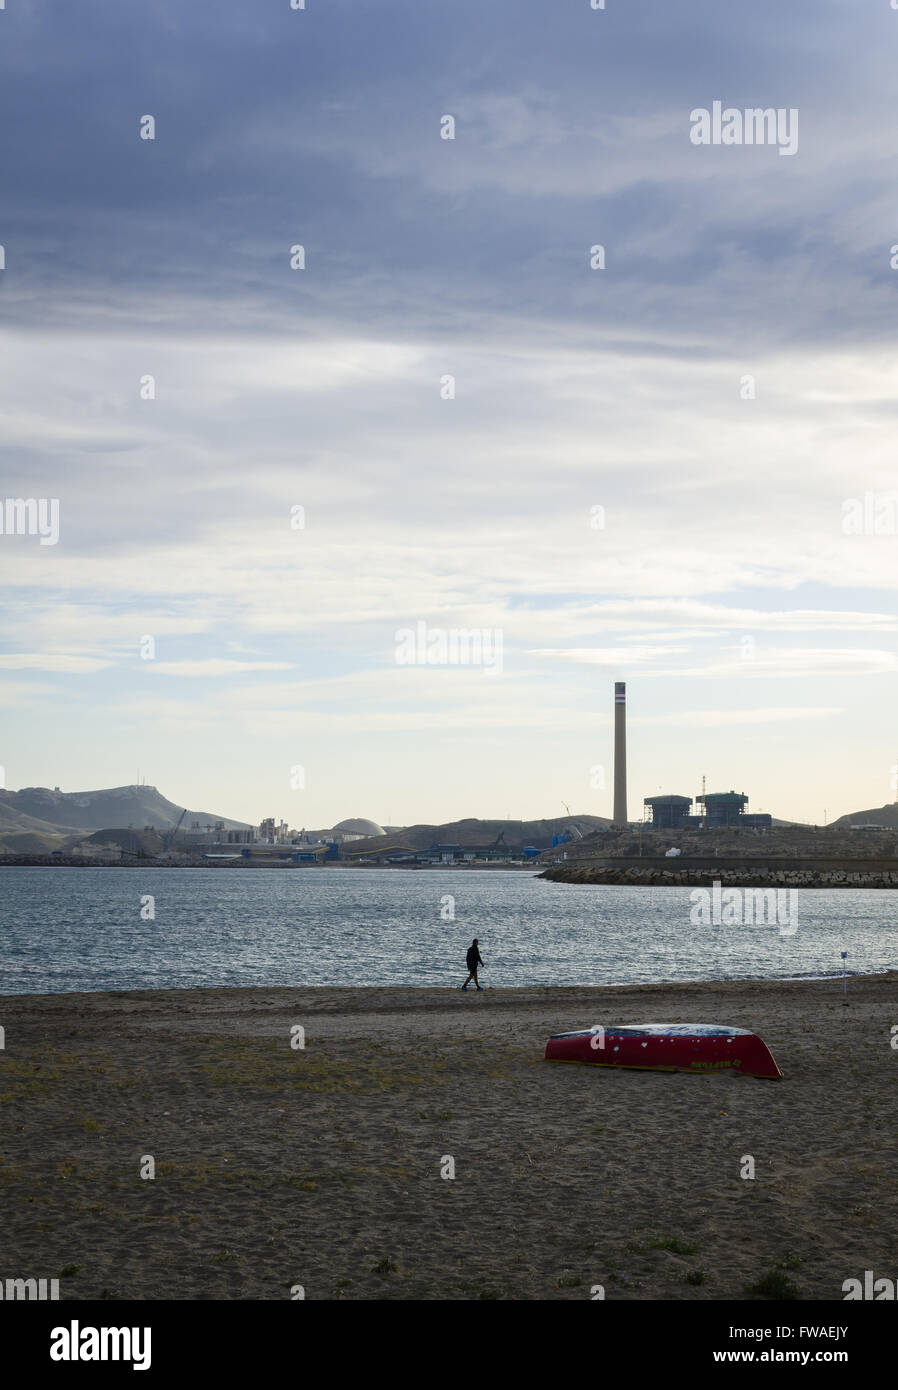 A red boat view in Carboneras beach, Almeria, Spain Stock Photo